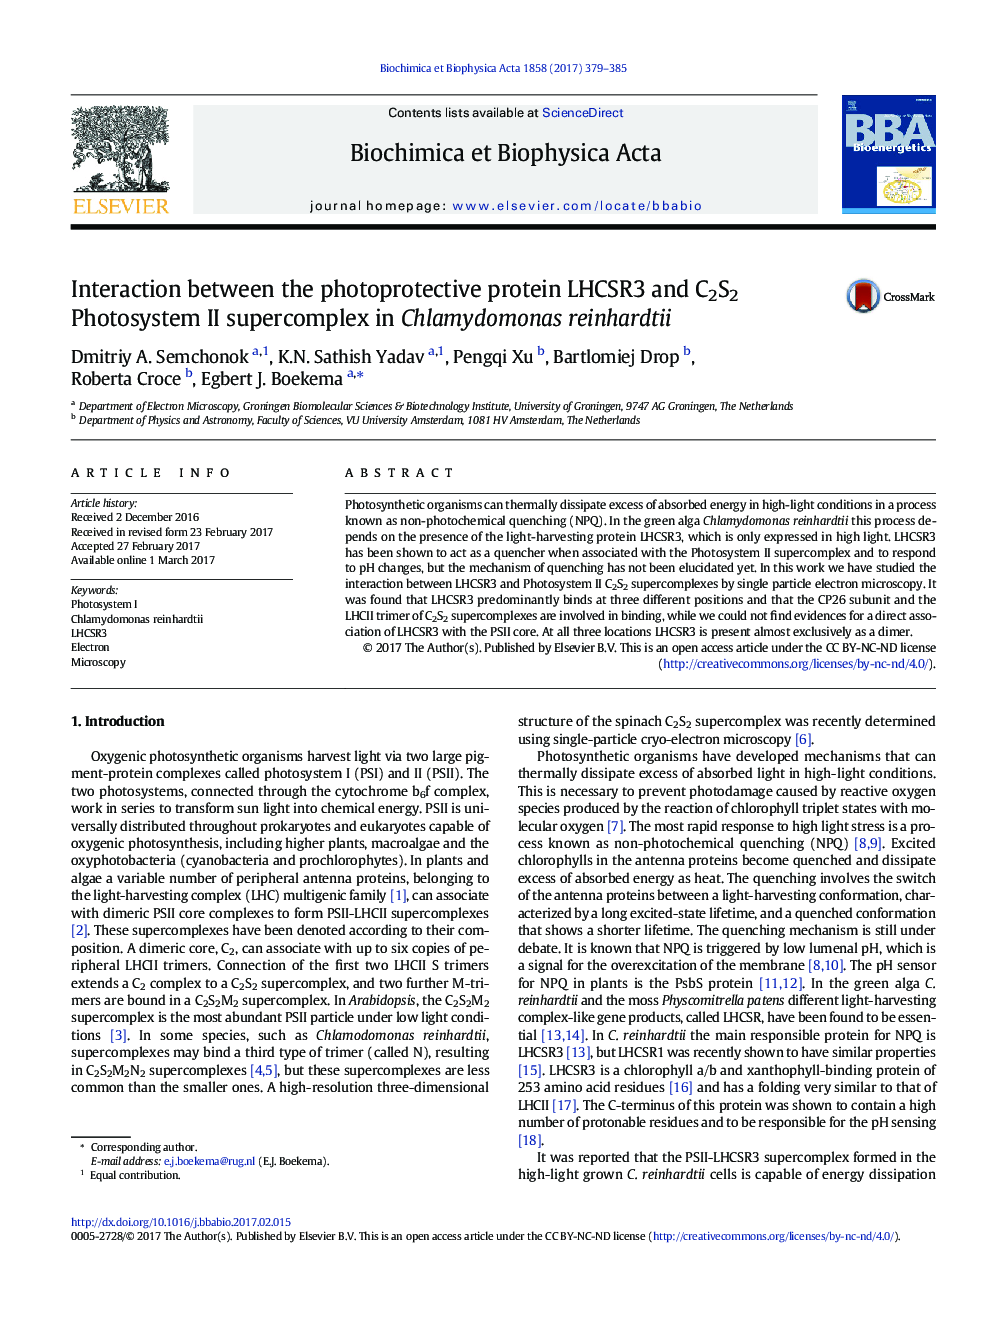 Interaction between the photoprotective protein LHCSR3 and C2S2 Photosystem II supercomplex in Chlamydomonas reinhardtii